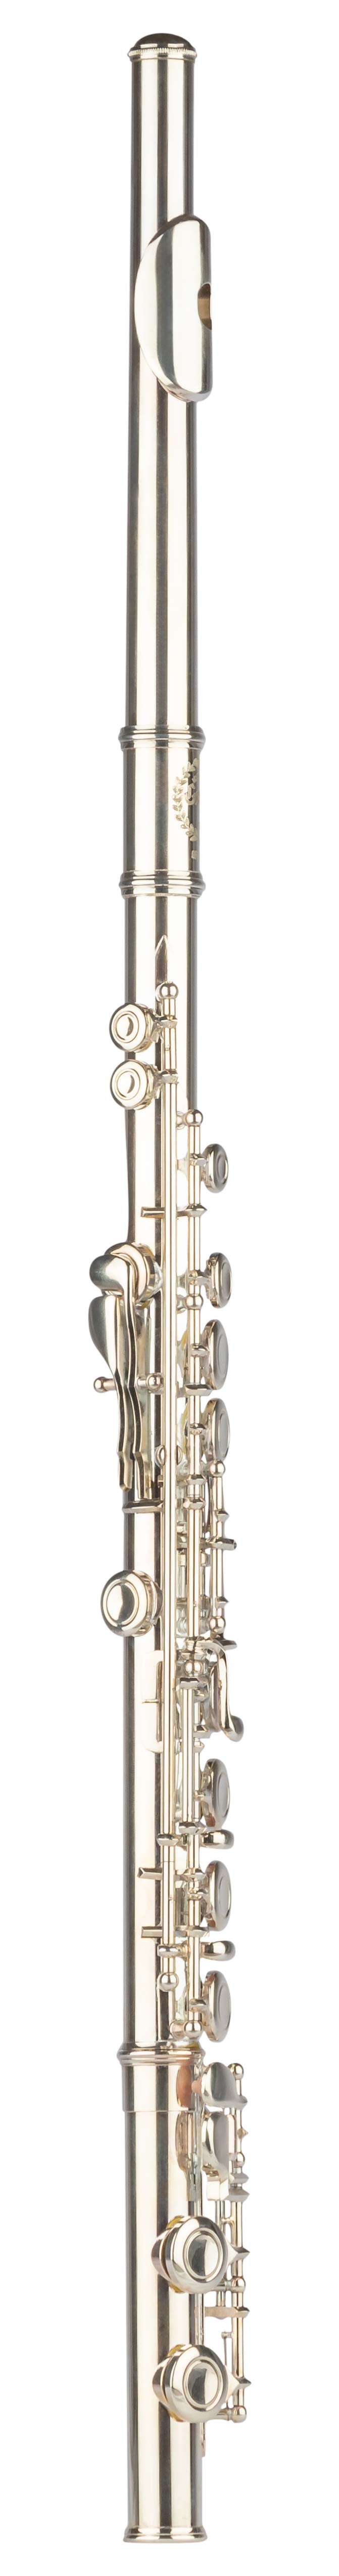 Grassi GR SFL290 Flute in C Alpaca Silver Plated (School Series)